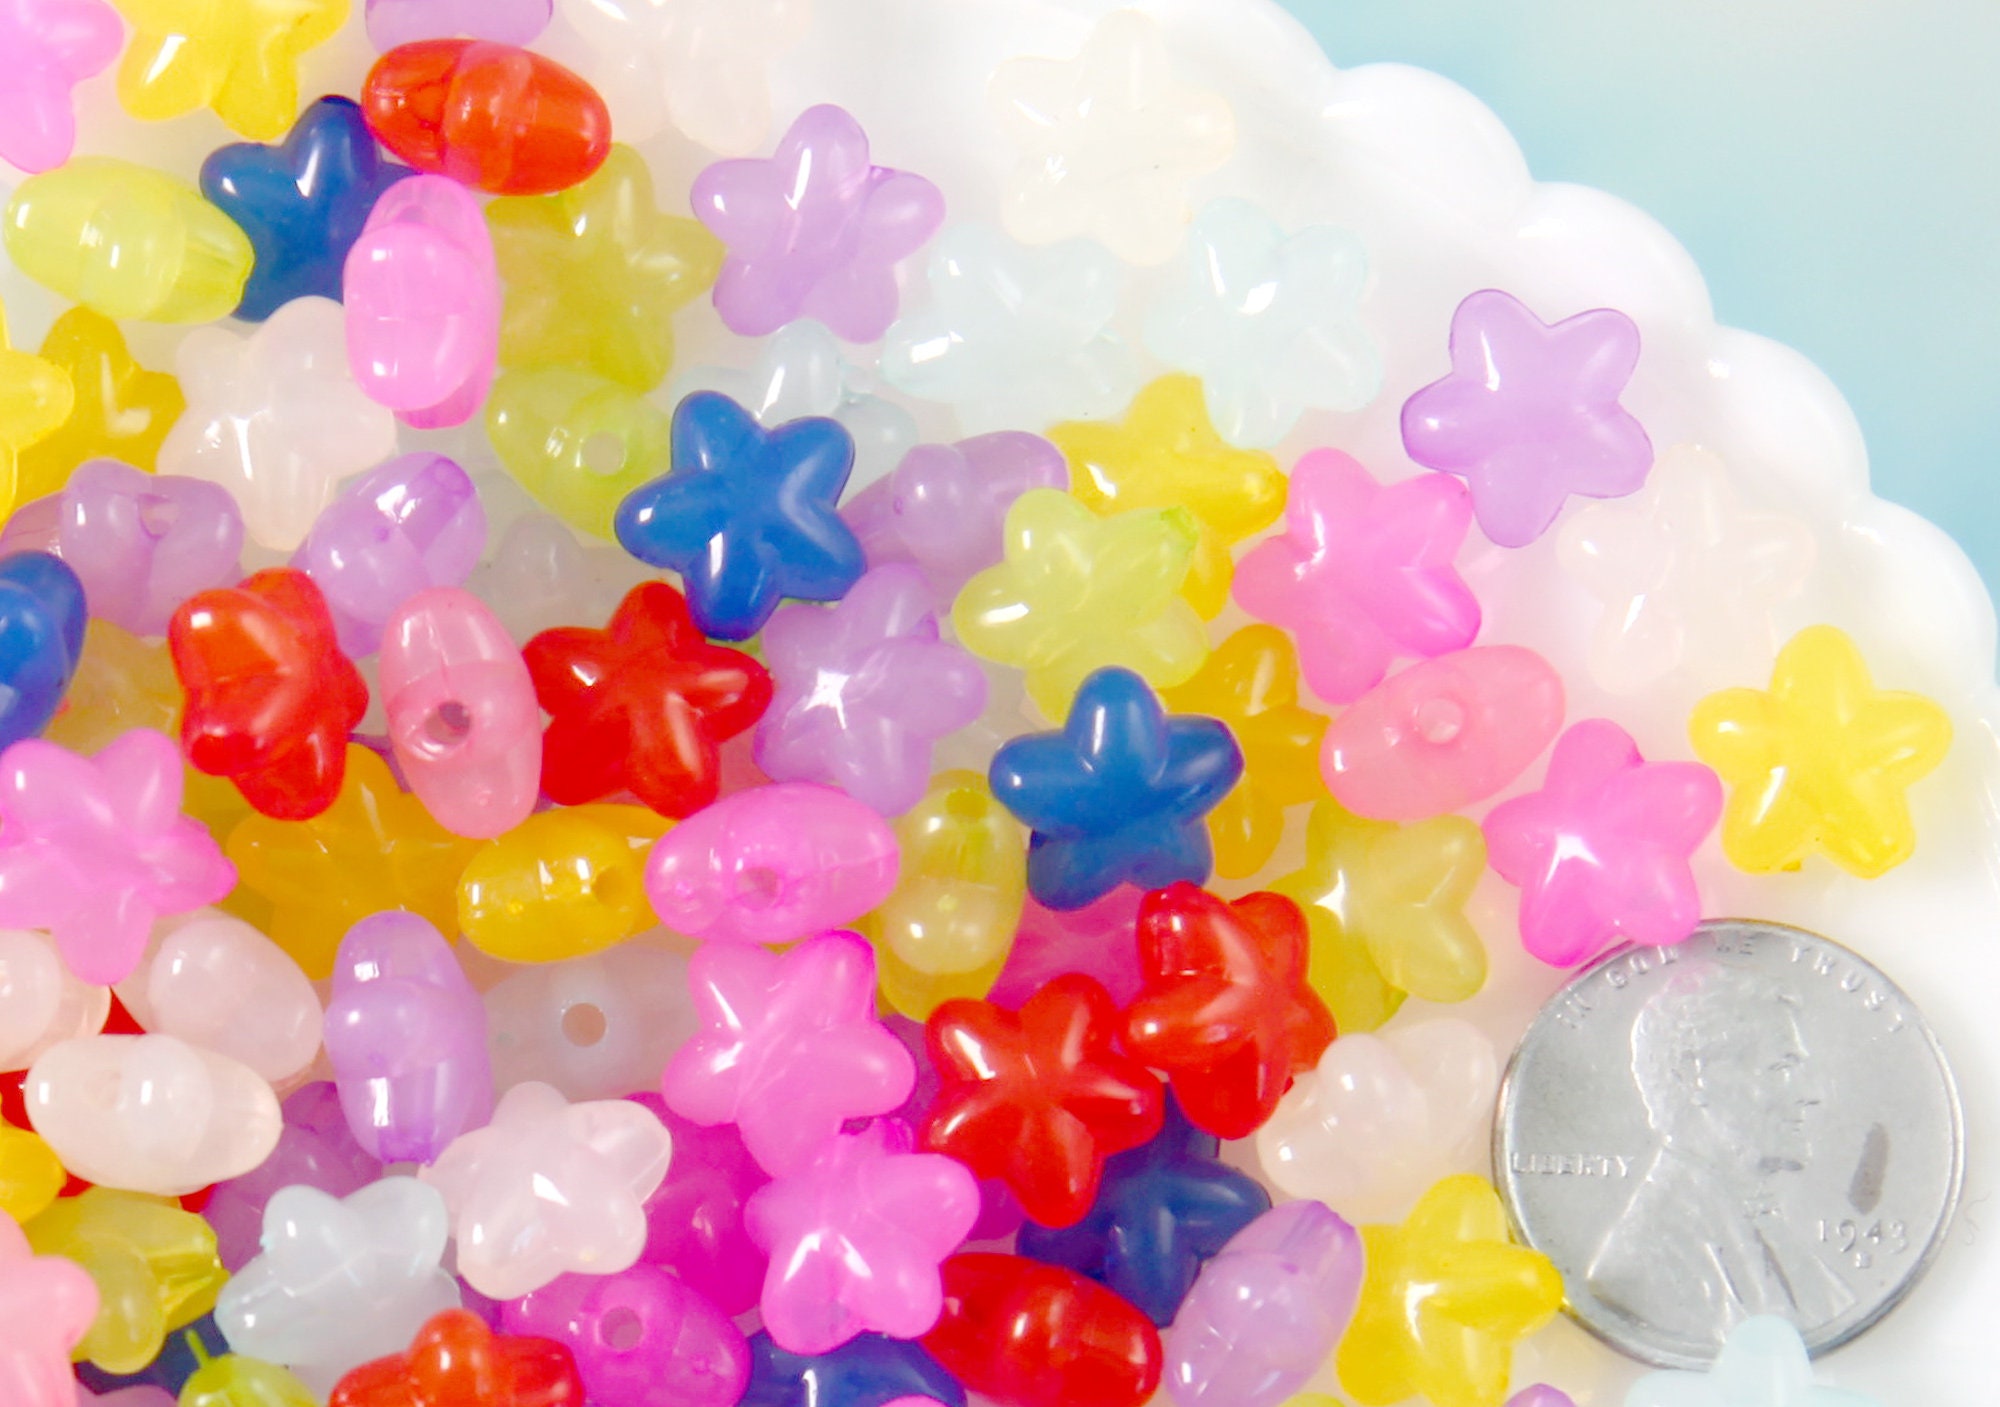 Bear Beads - 14mm Tiny Teddy Bear Bright Color Acrylic or Plastic Beads -  100 pc set